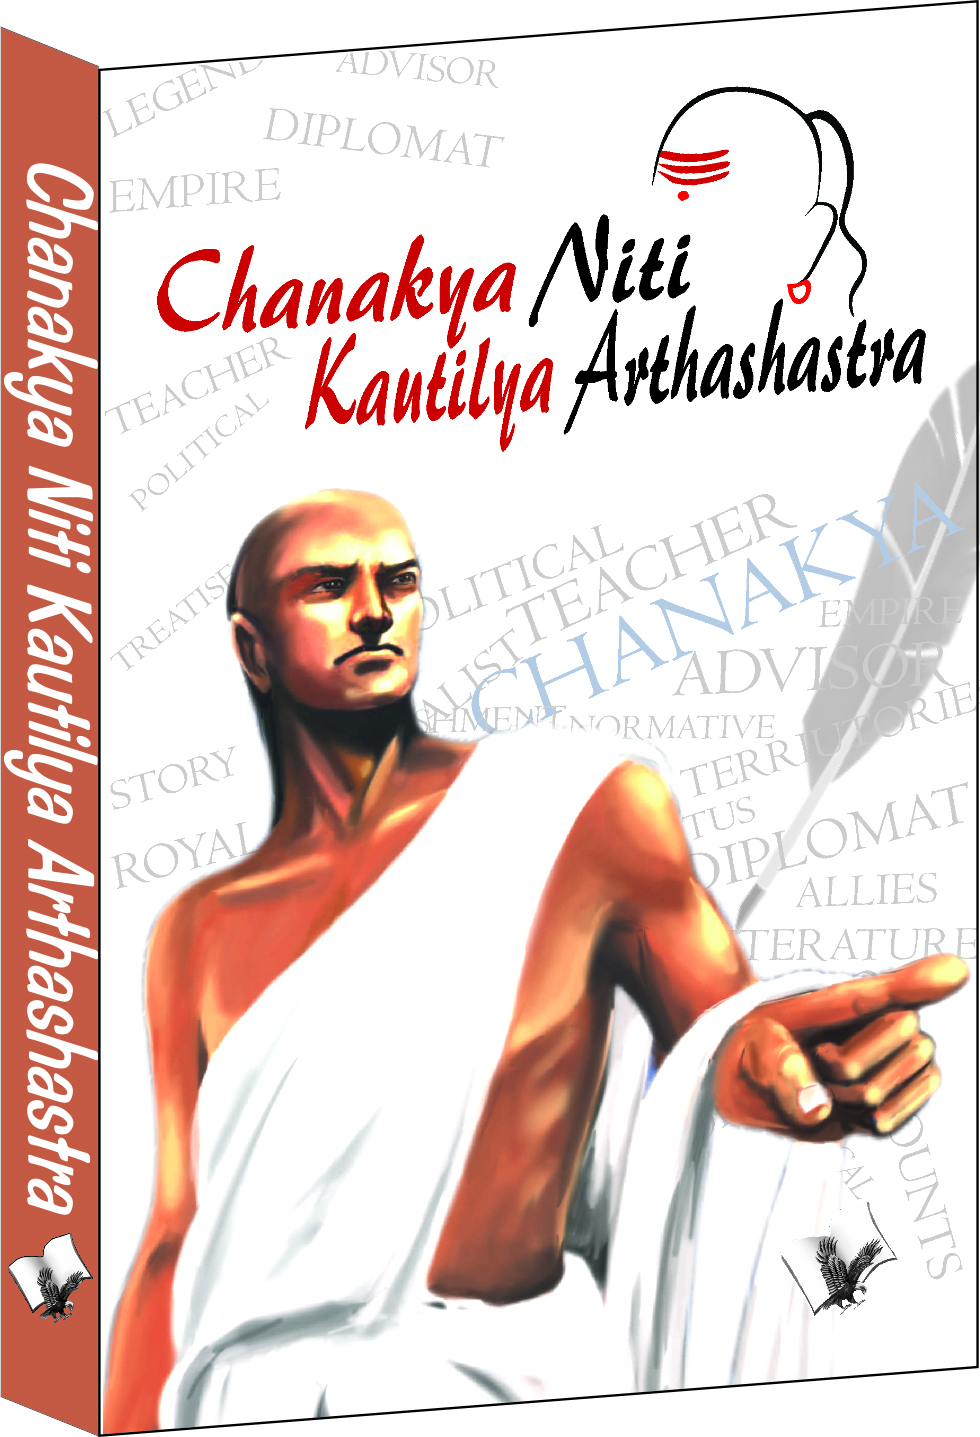 Chanakya Nithi Kautilaya Arthashastra -The principles he effectively applied on politics, administration, statecraft, espionage, diplomacy